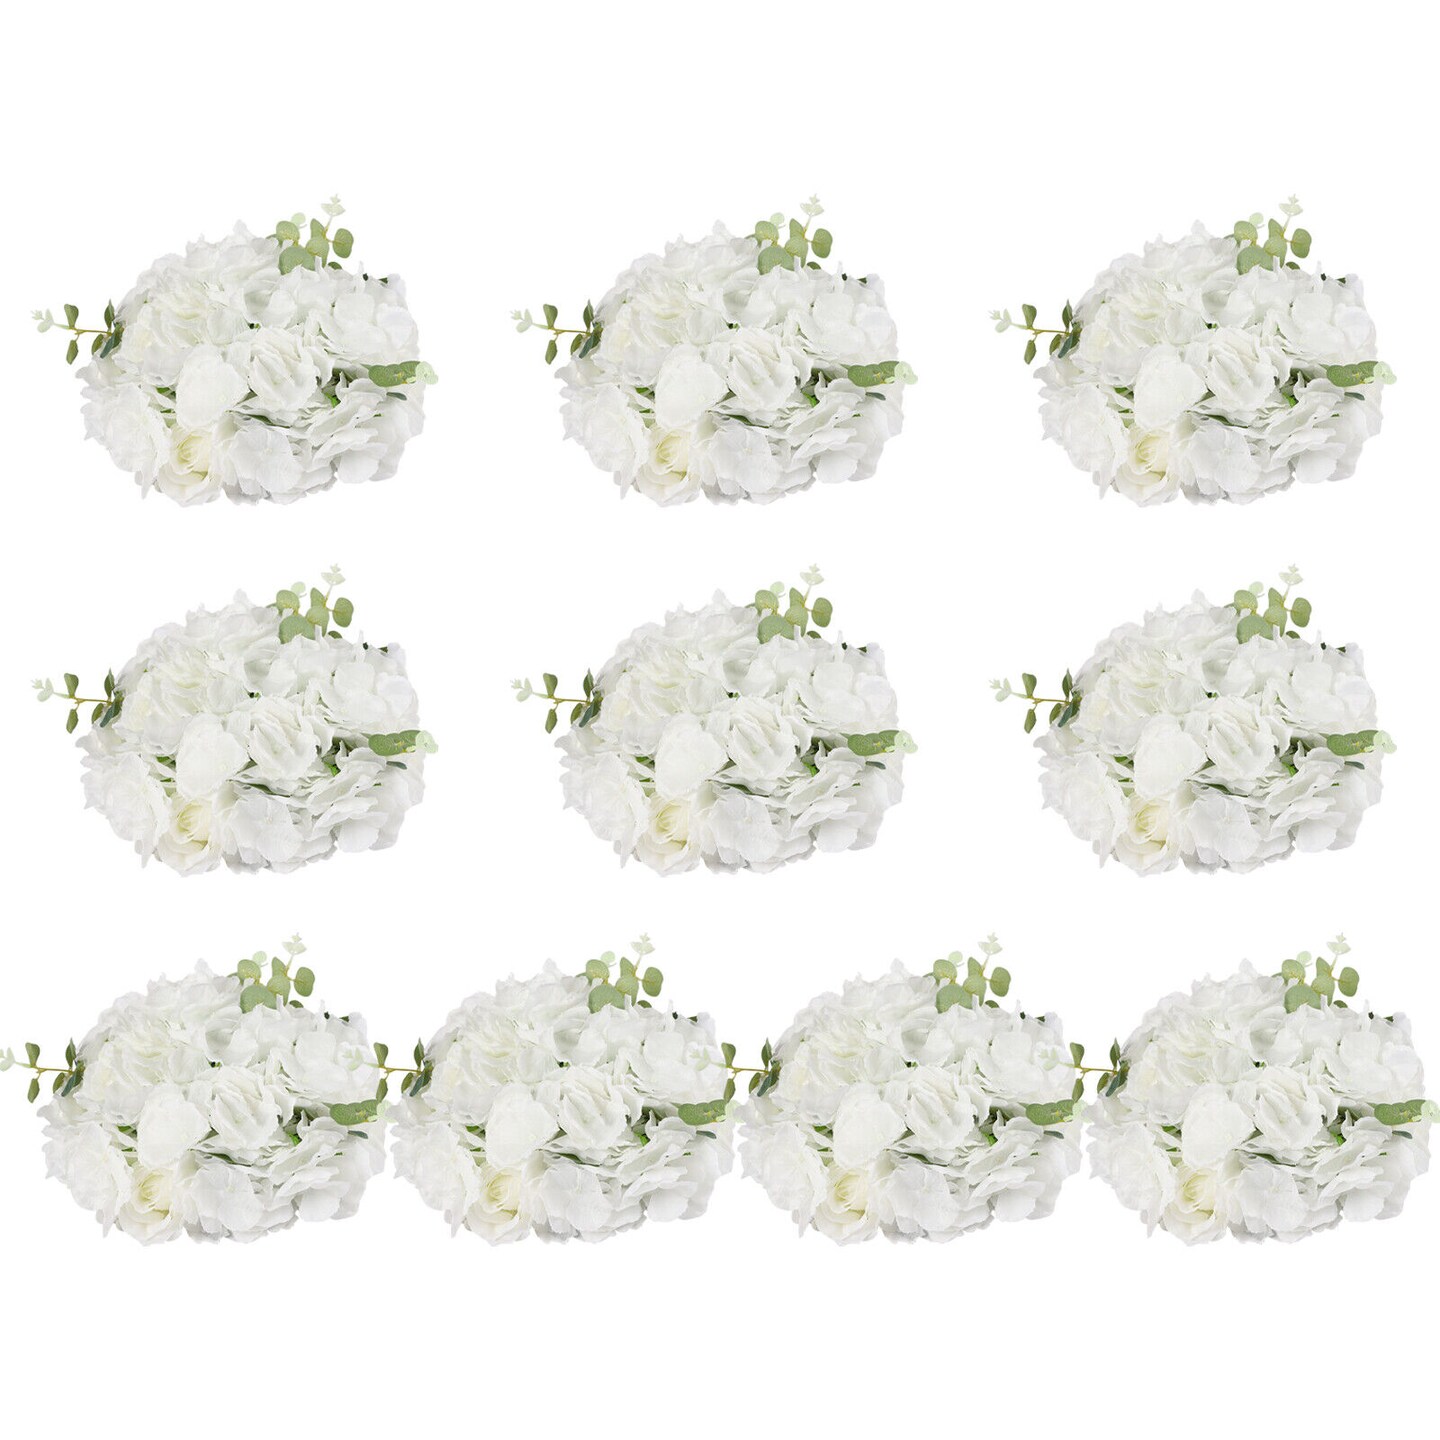 Kitcheniva 10 Pcs 12-Head Artificial Wedding Flower Balls